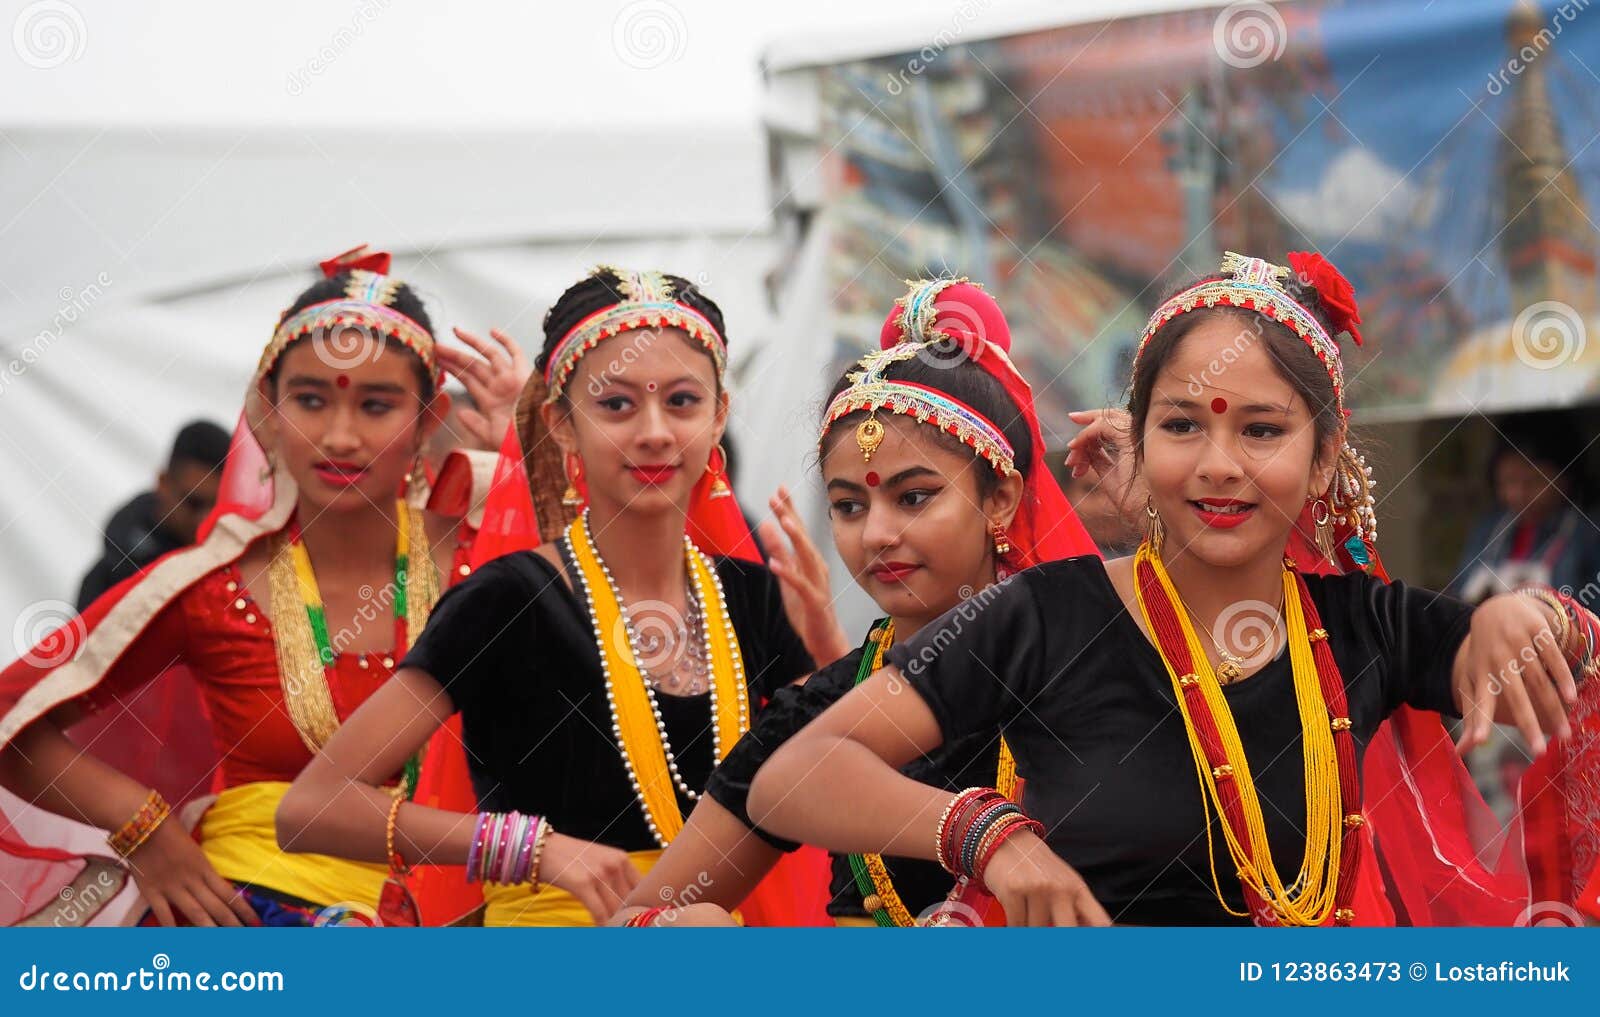 Pin by Preeya Subba on Nepal Traditional dress | Dress culture, Gurung dress,  Velvet dress short